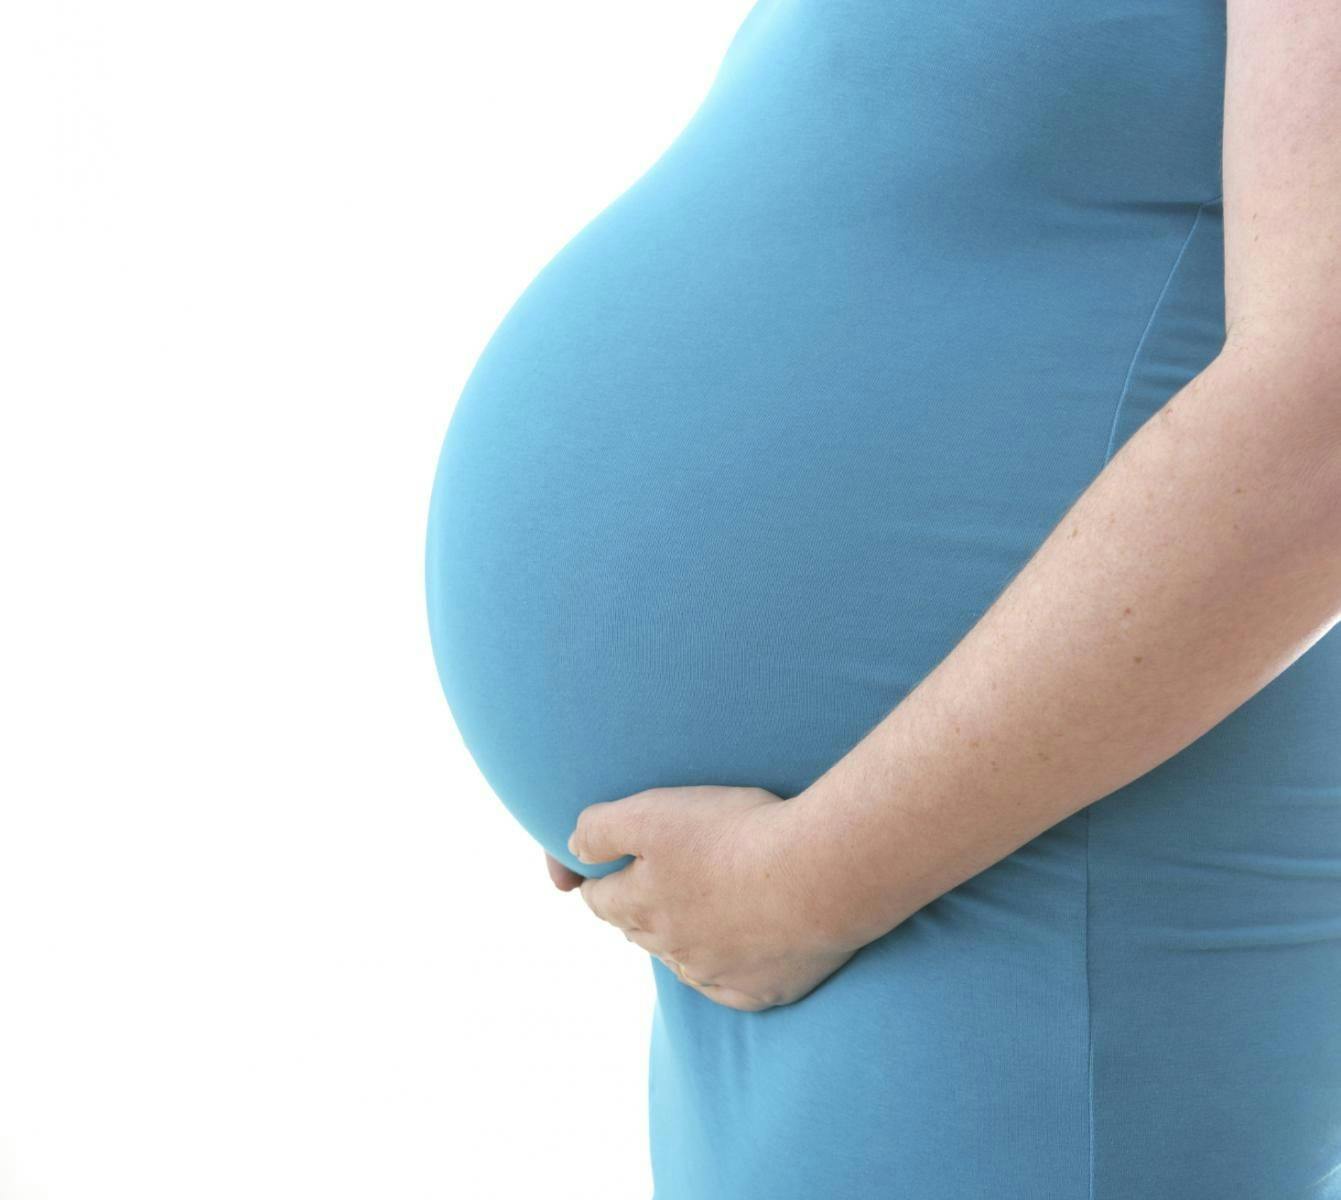 Vitamin E Status Linked to Miscarriage?